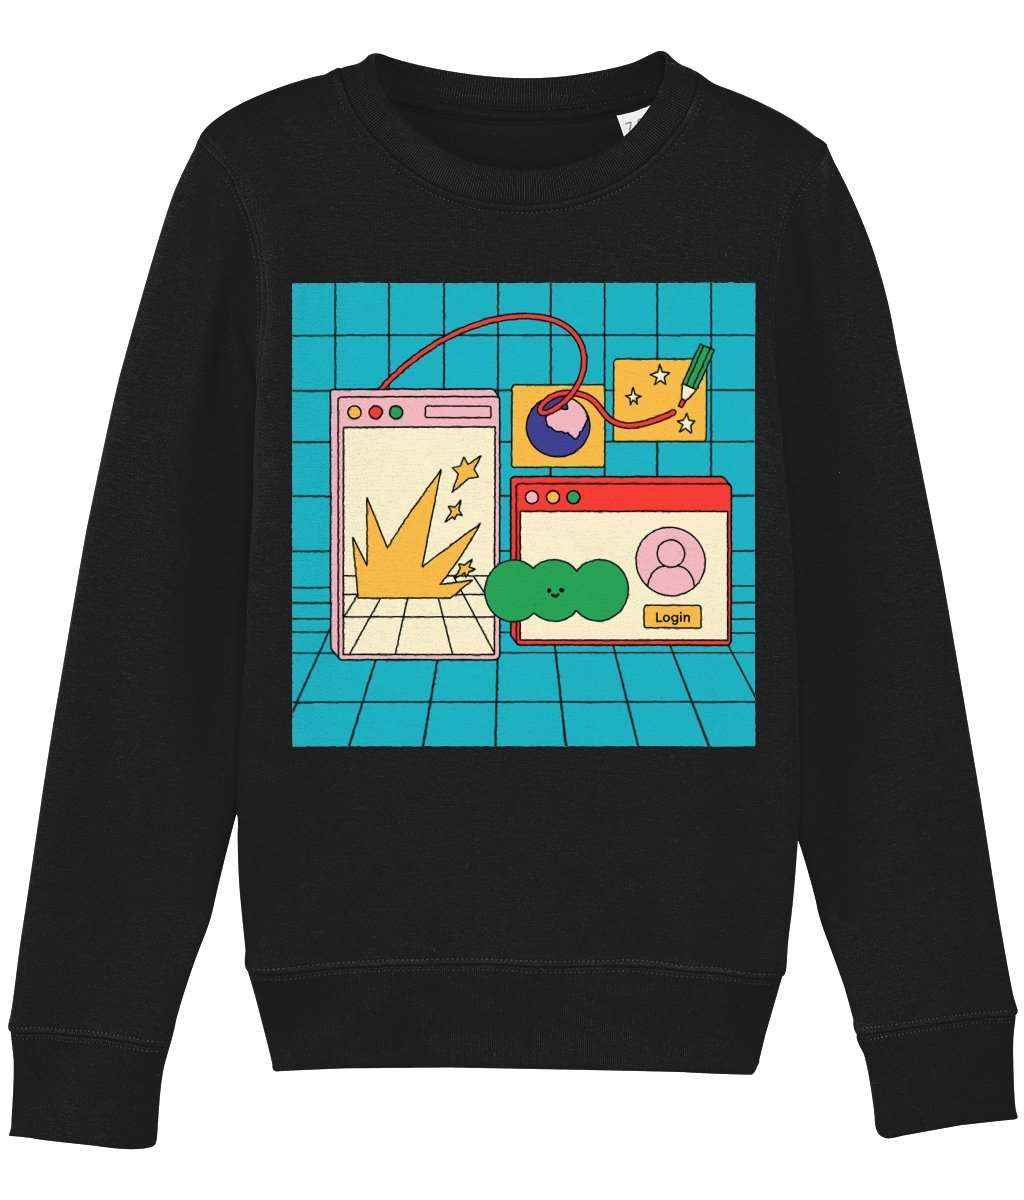 Creative Boom Sweatshirt - Artworks Clothing